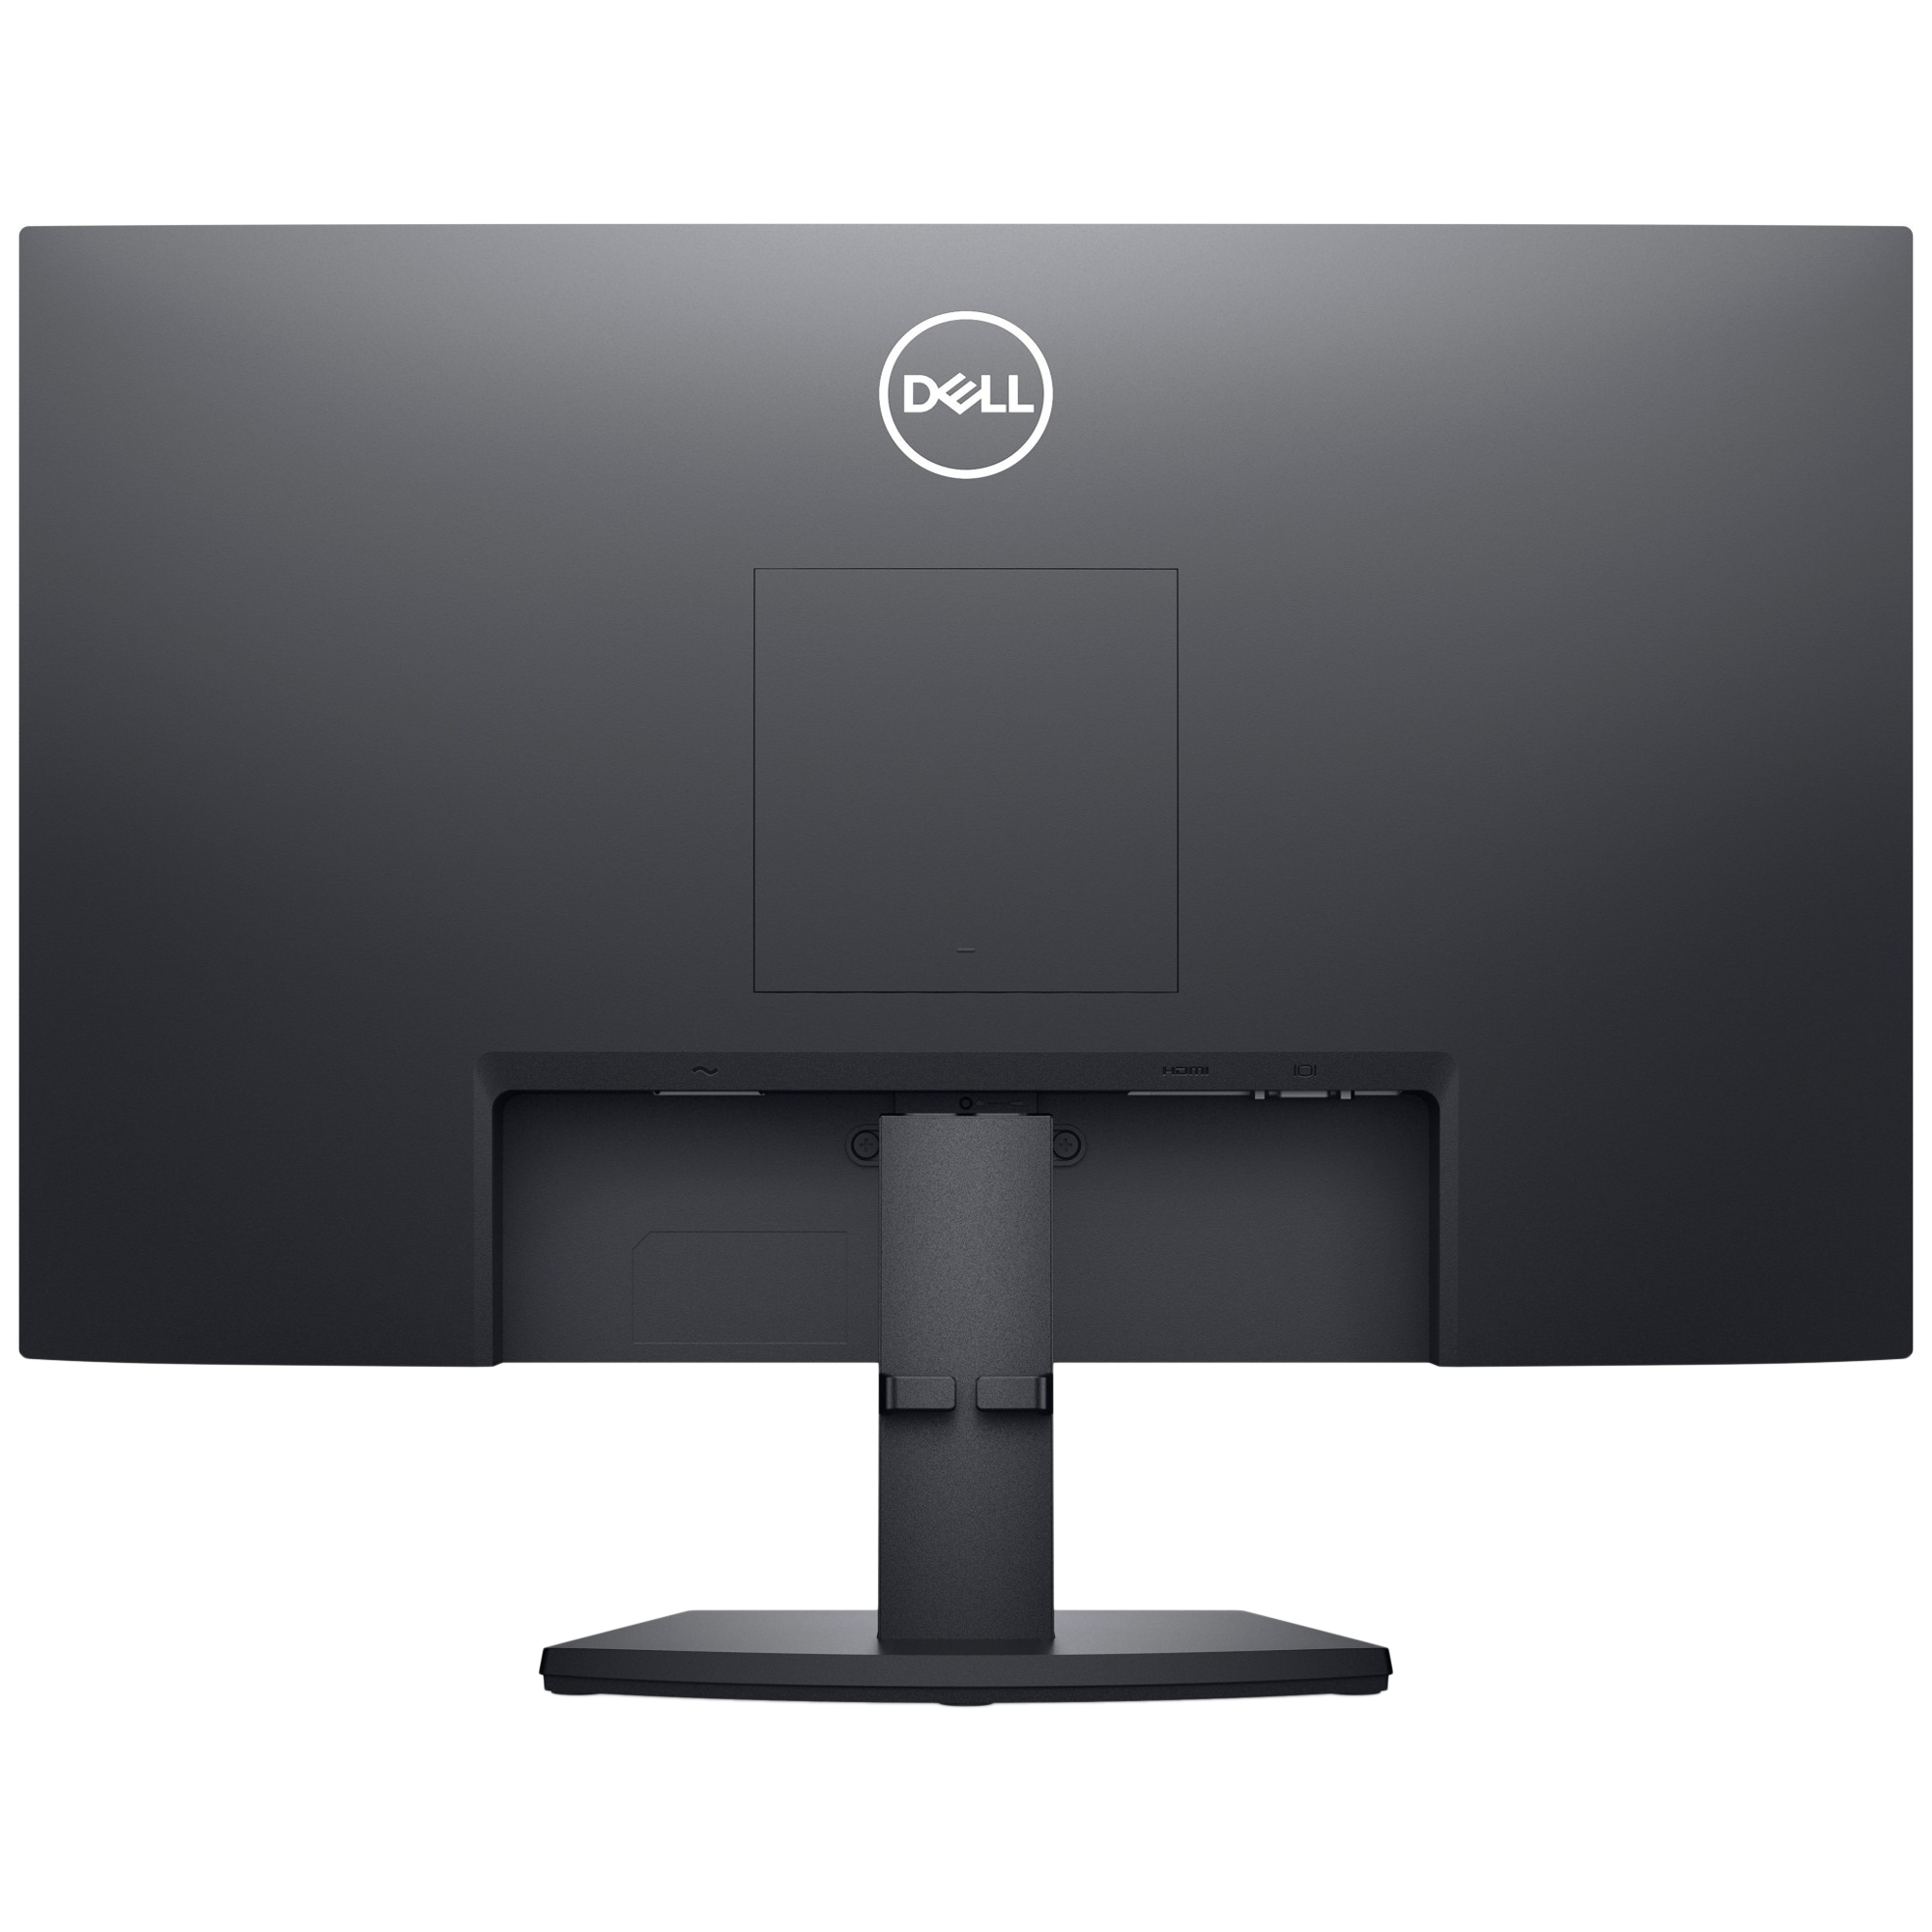 Dell SE2422H 60.96cm (24 Inches) Full HD Flat Panel Monitor (AMD FreeSync Technology, VGA + HDMI, 75 Hz, 210-AZGV, Black)_4